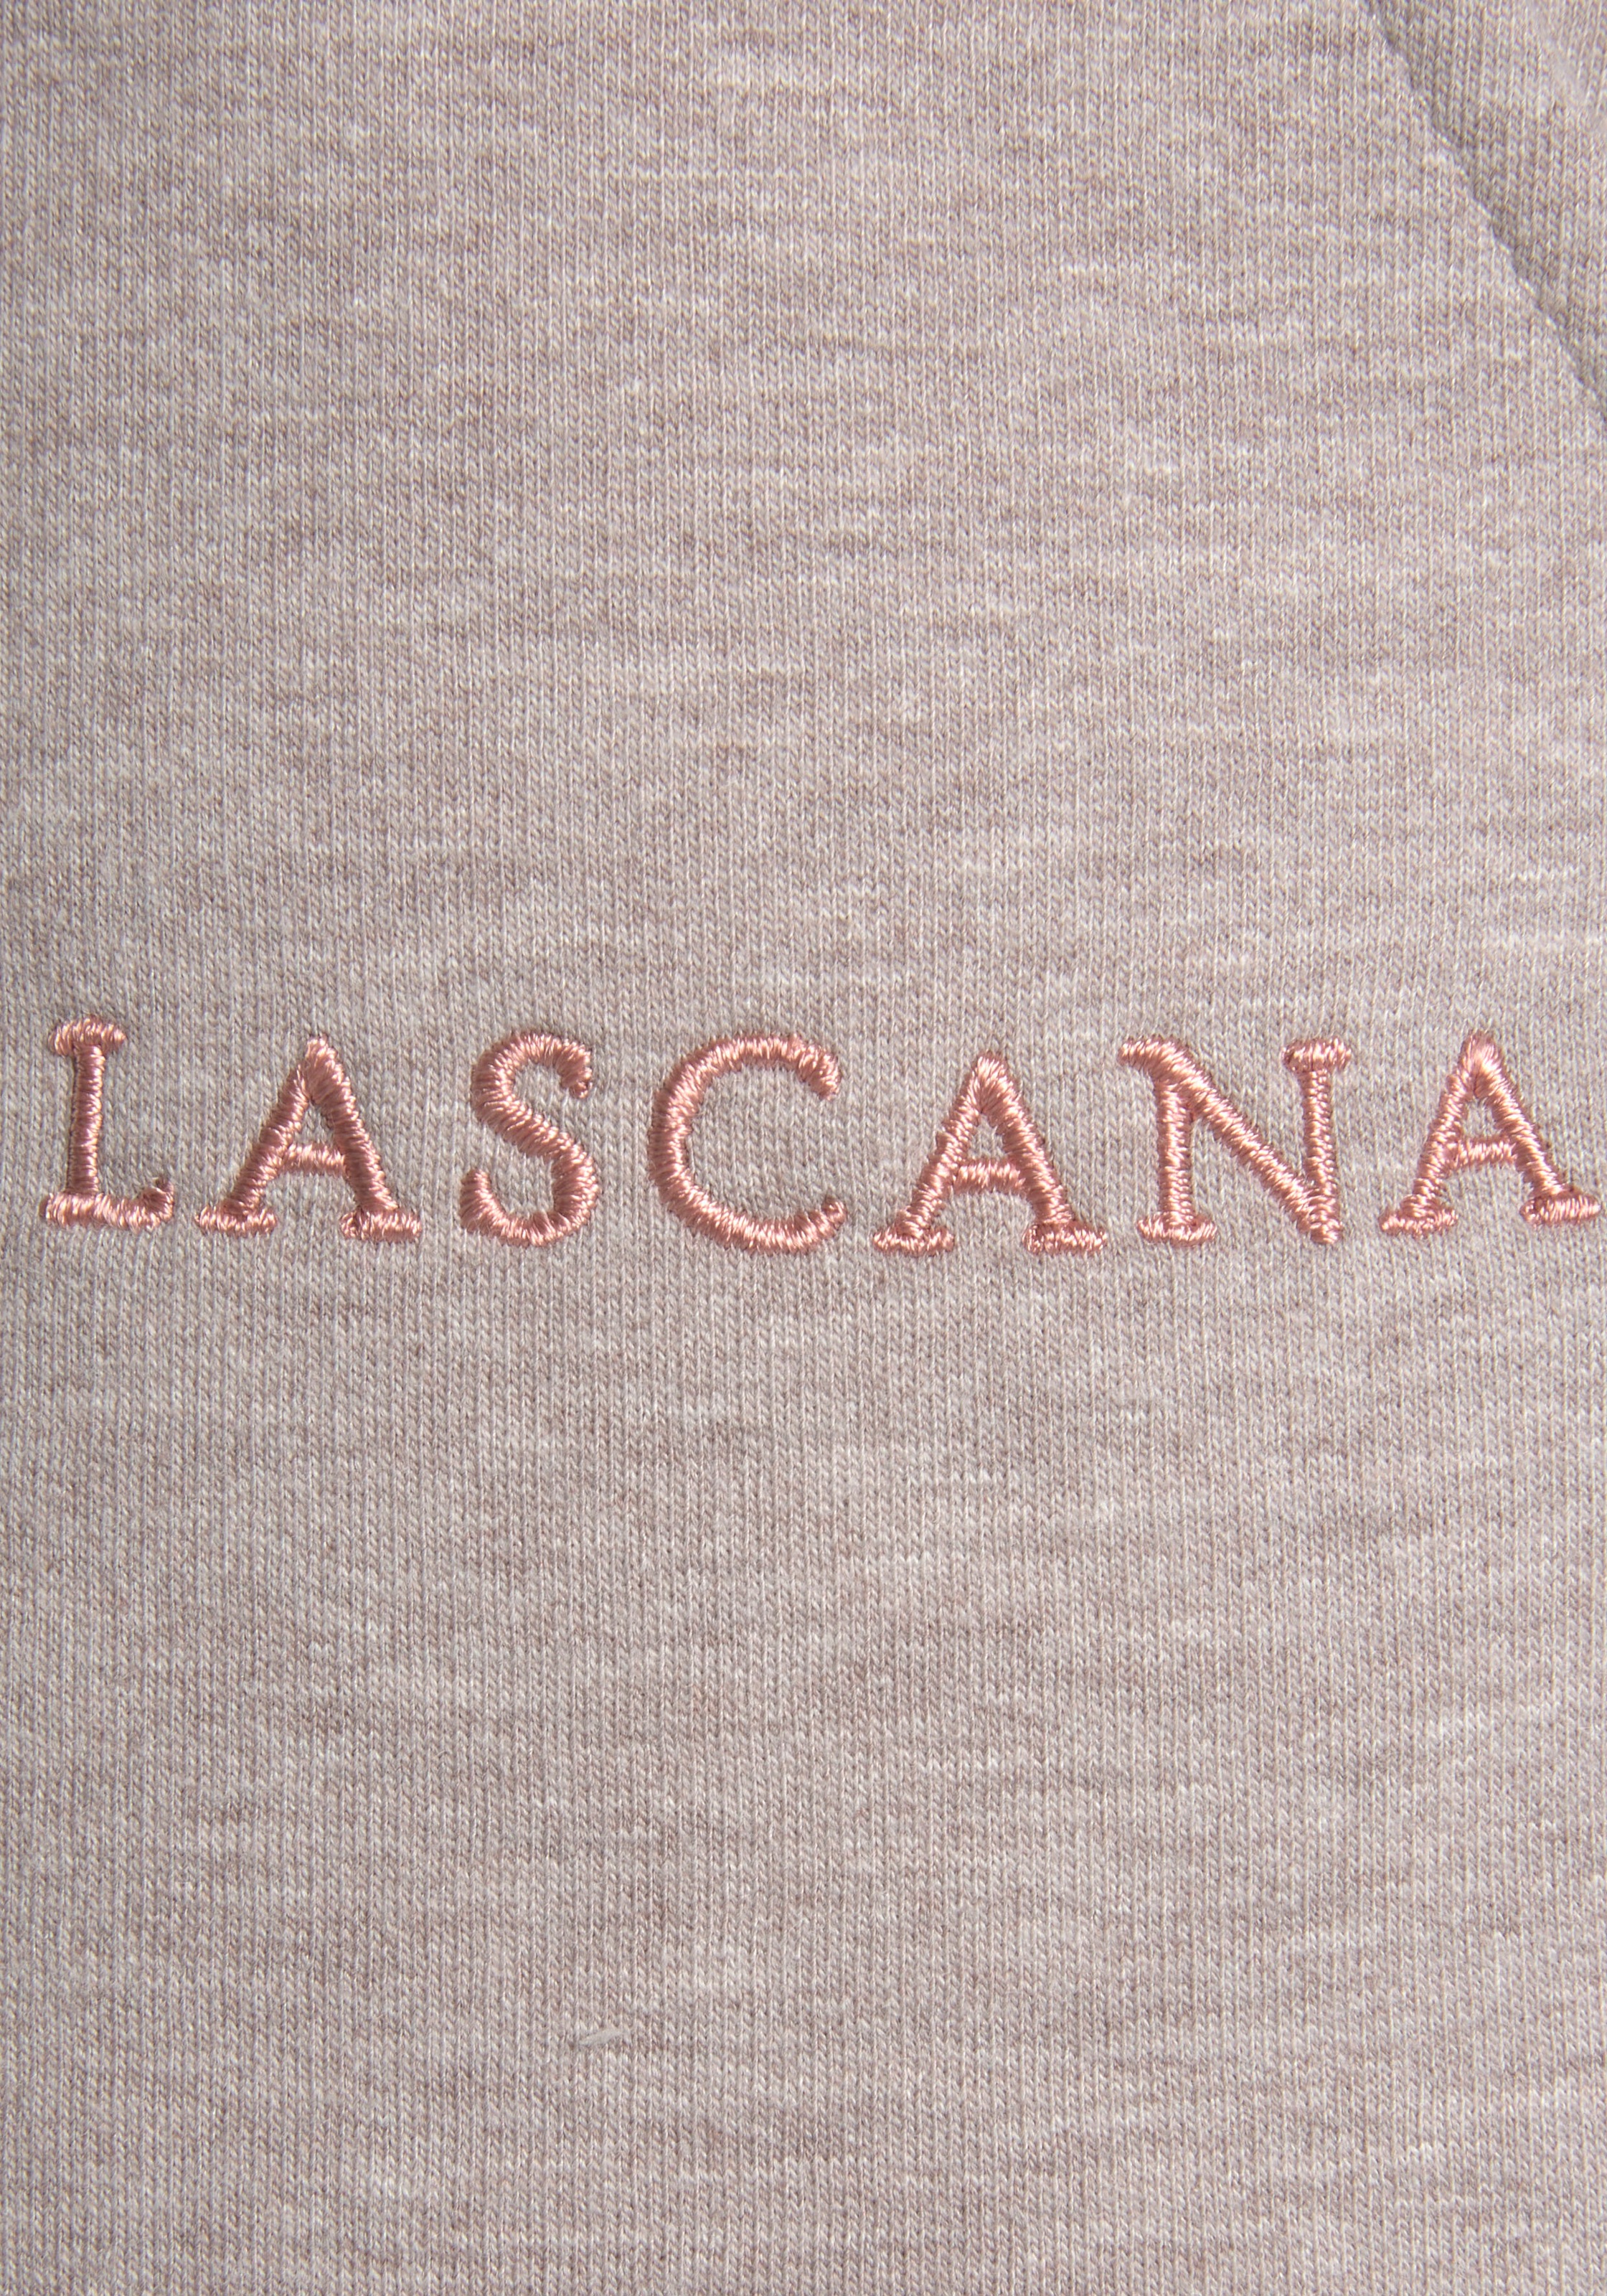 LASCANA Sweatshorts, mit Logostickerei, Loungeanzug